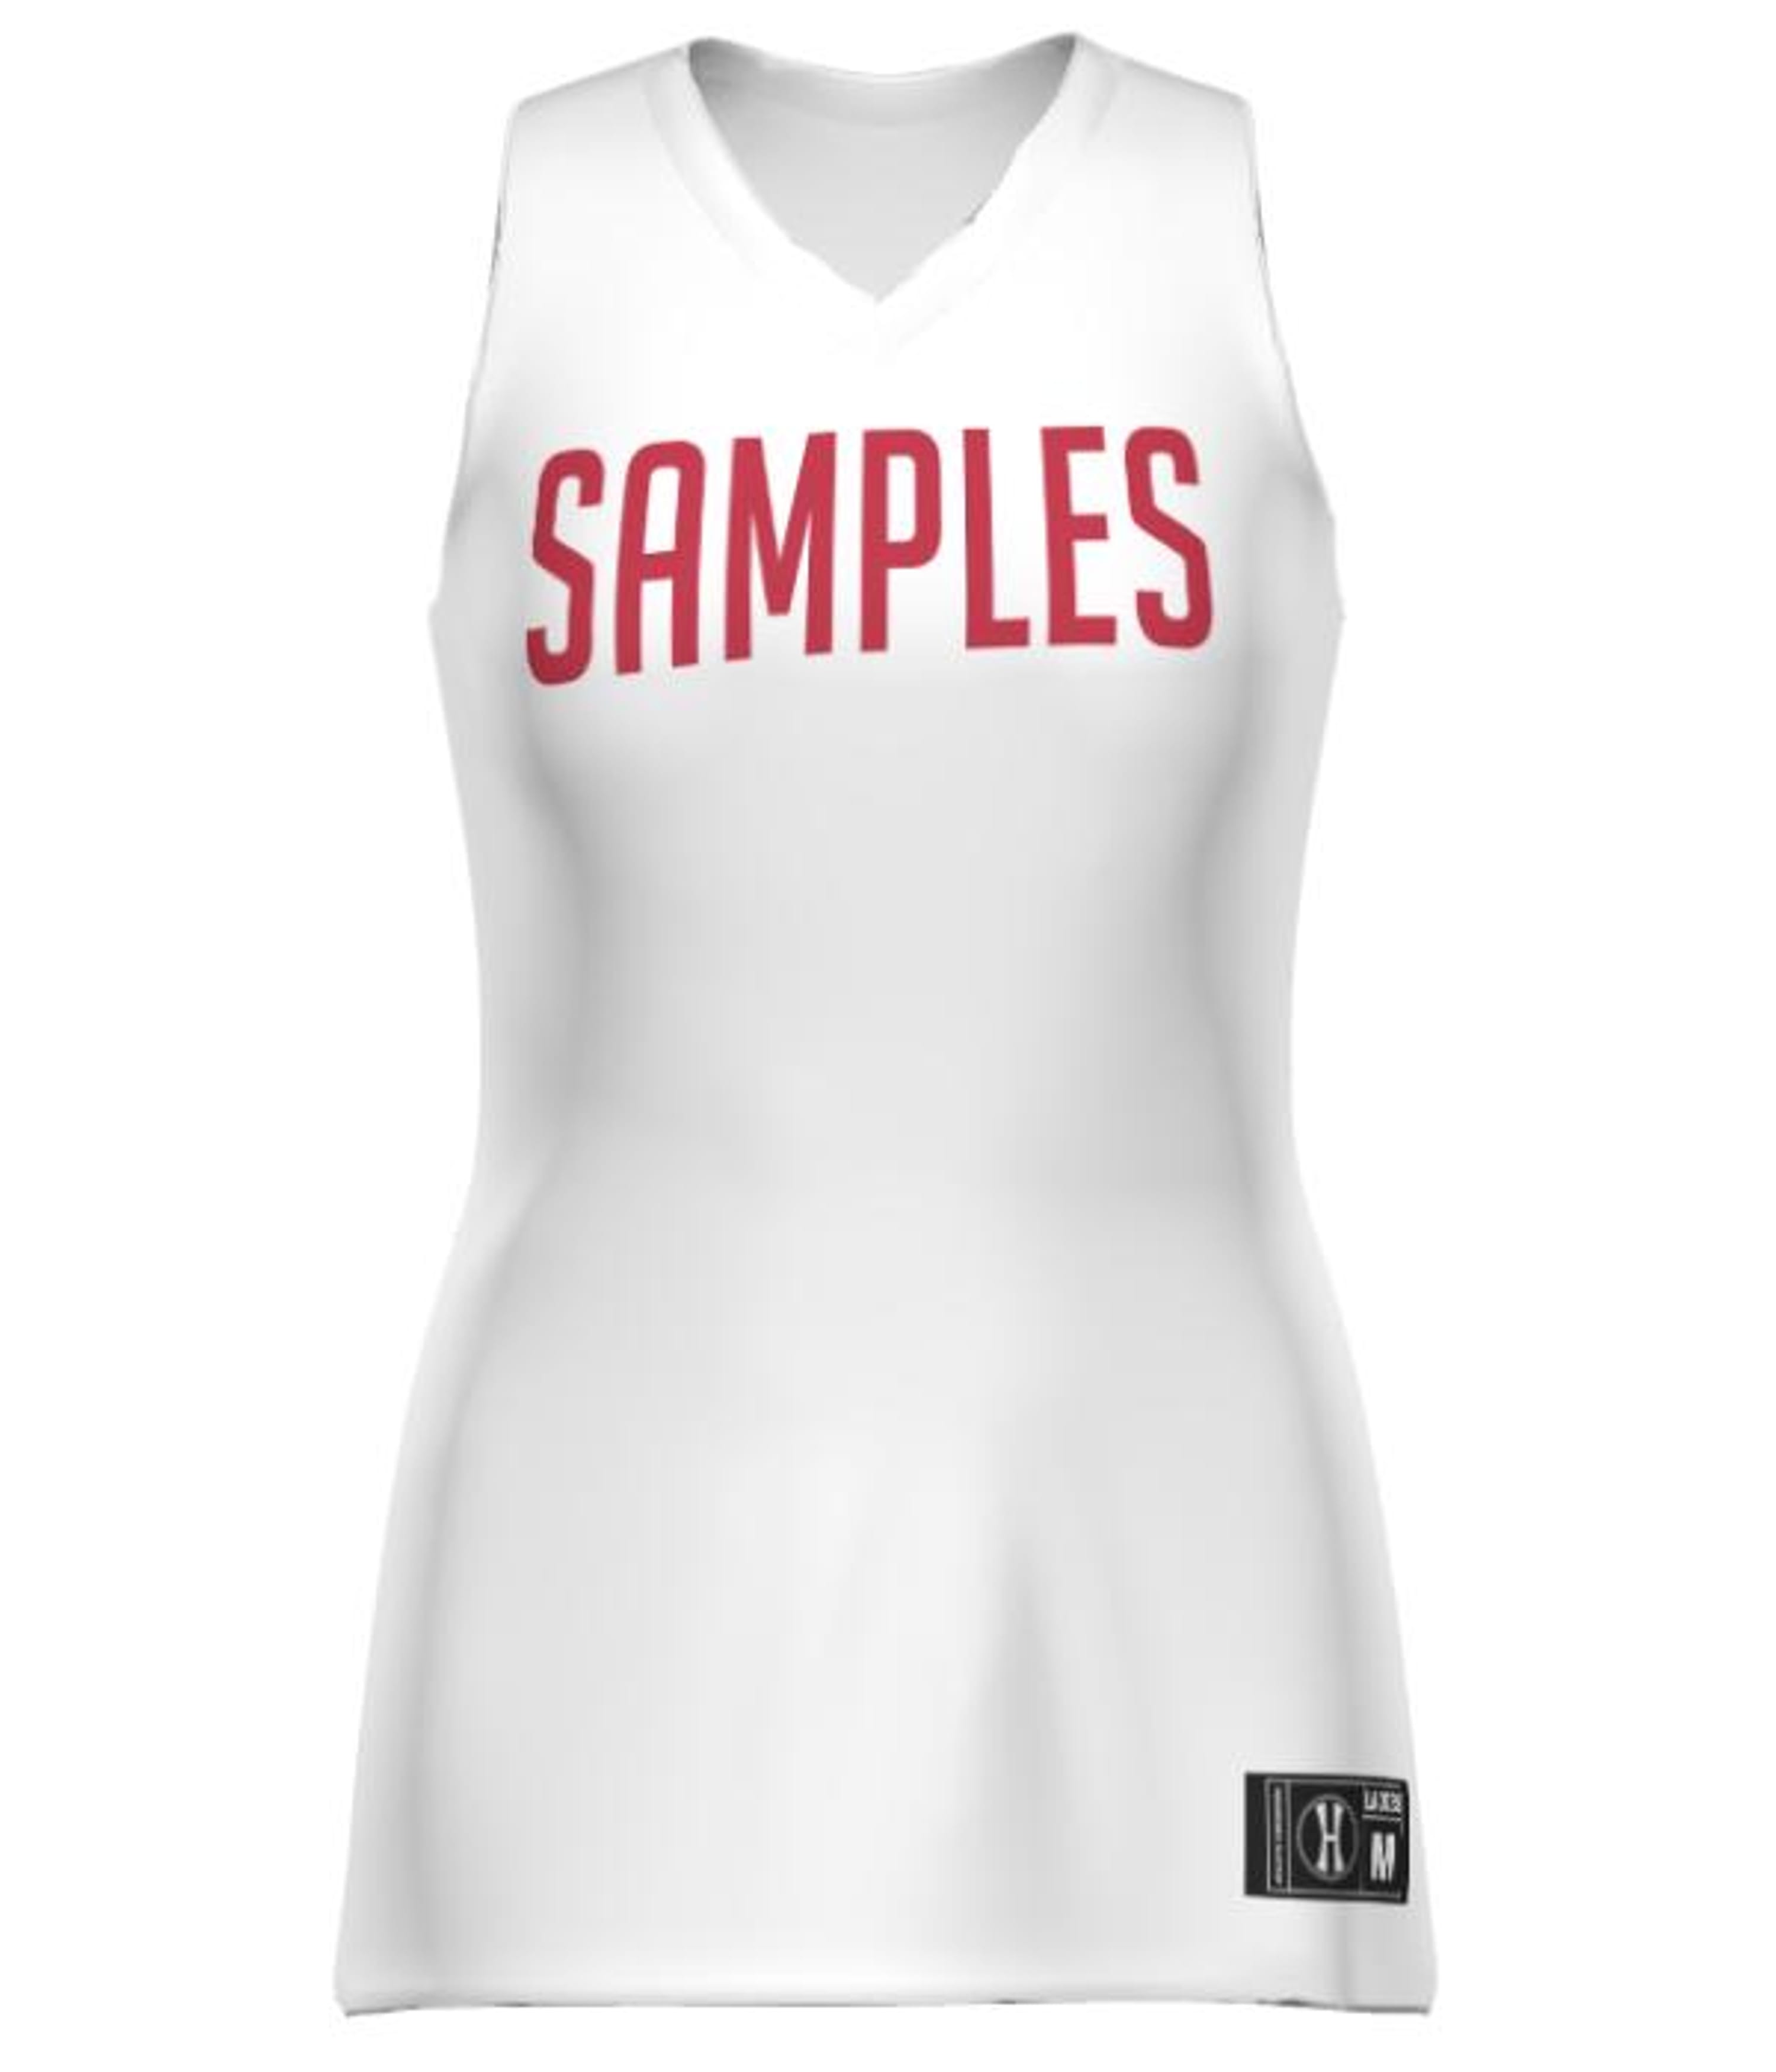 Ladies FreeStyle Sublimated Reversible V-Neck Softball Jersey